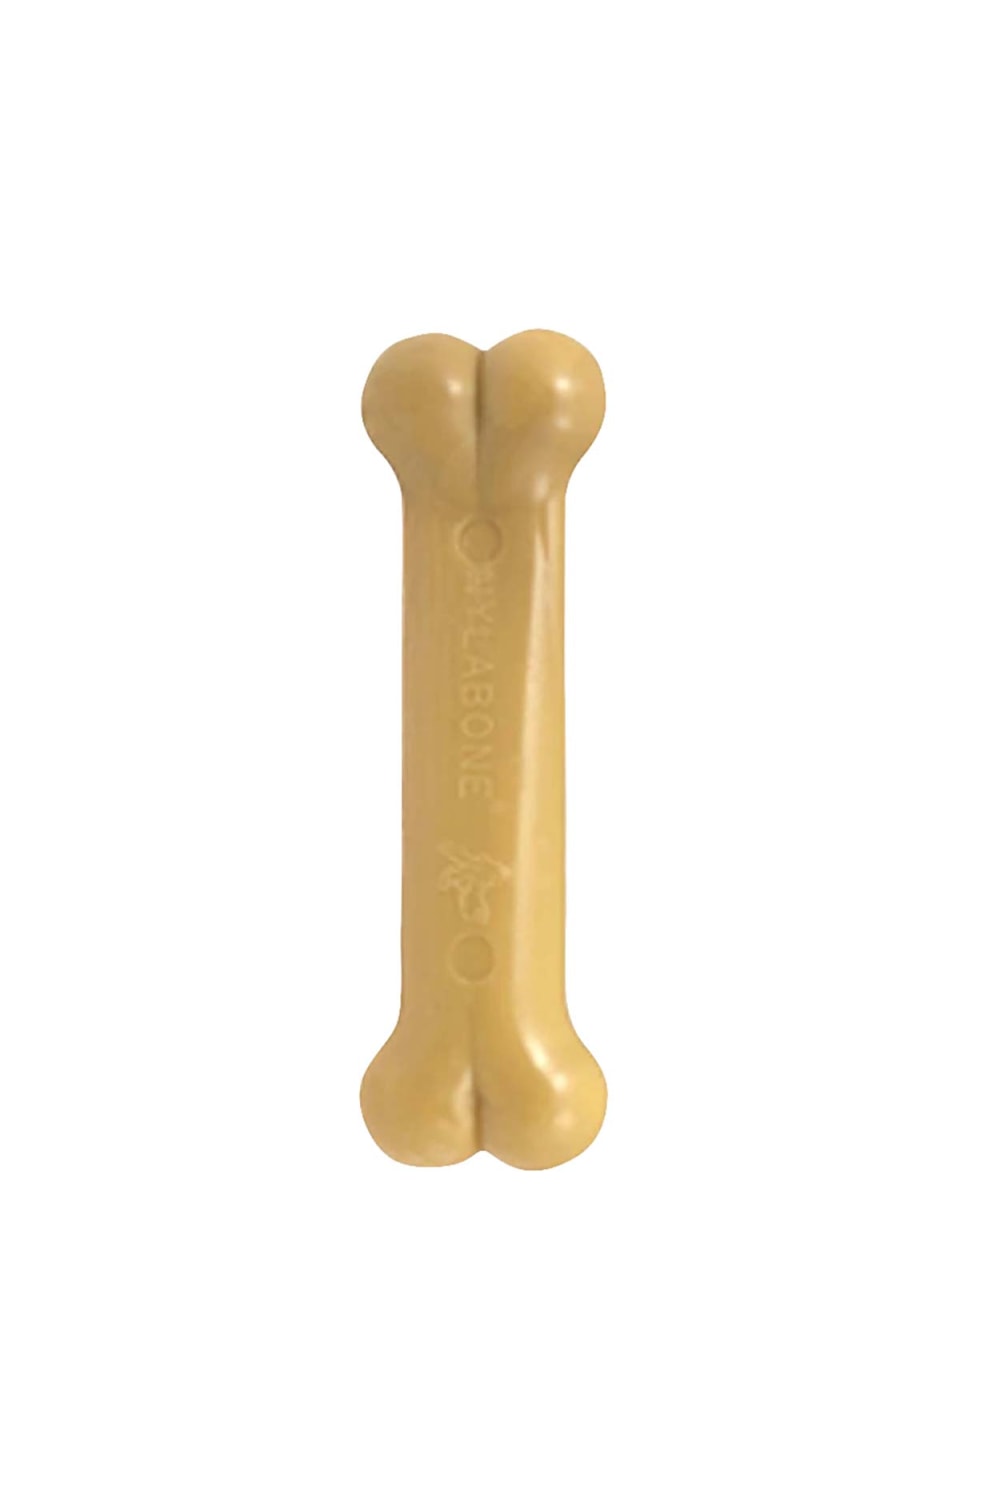 Nylabone Peanut Butter Impregnated Bone (May Vary) (One Size)